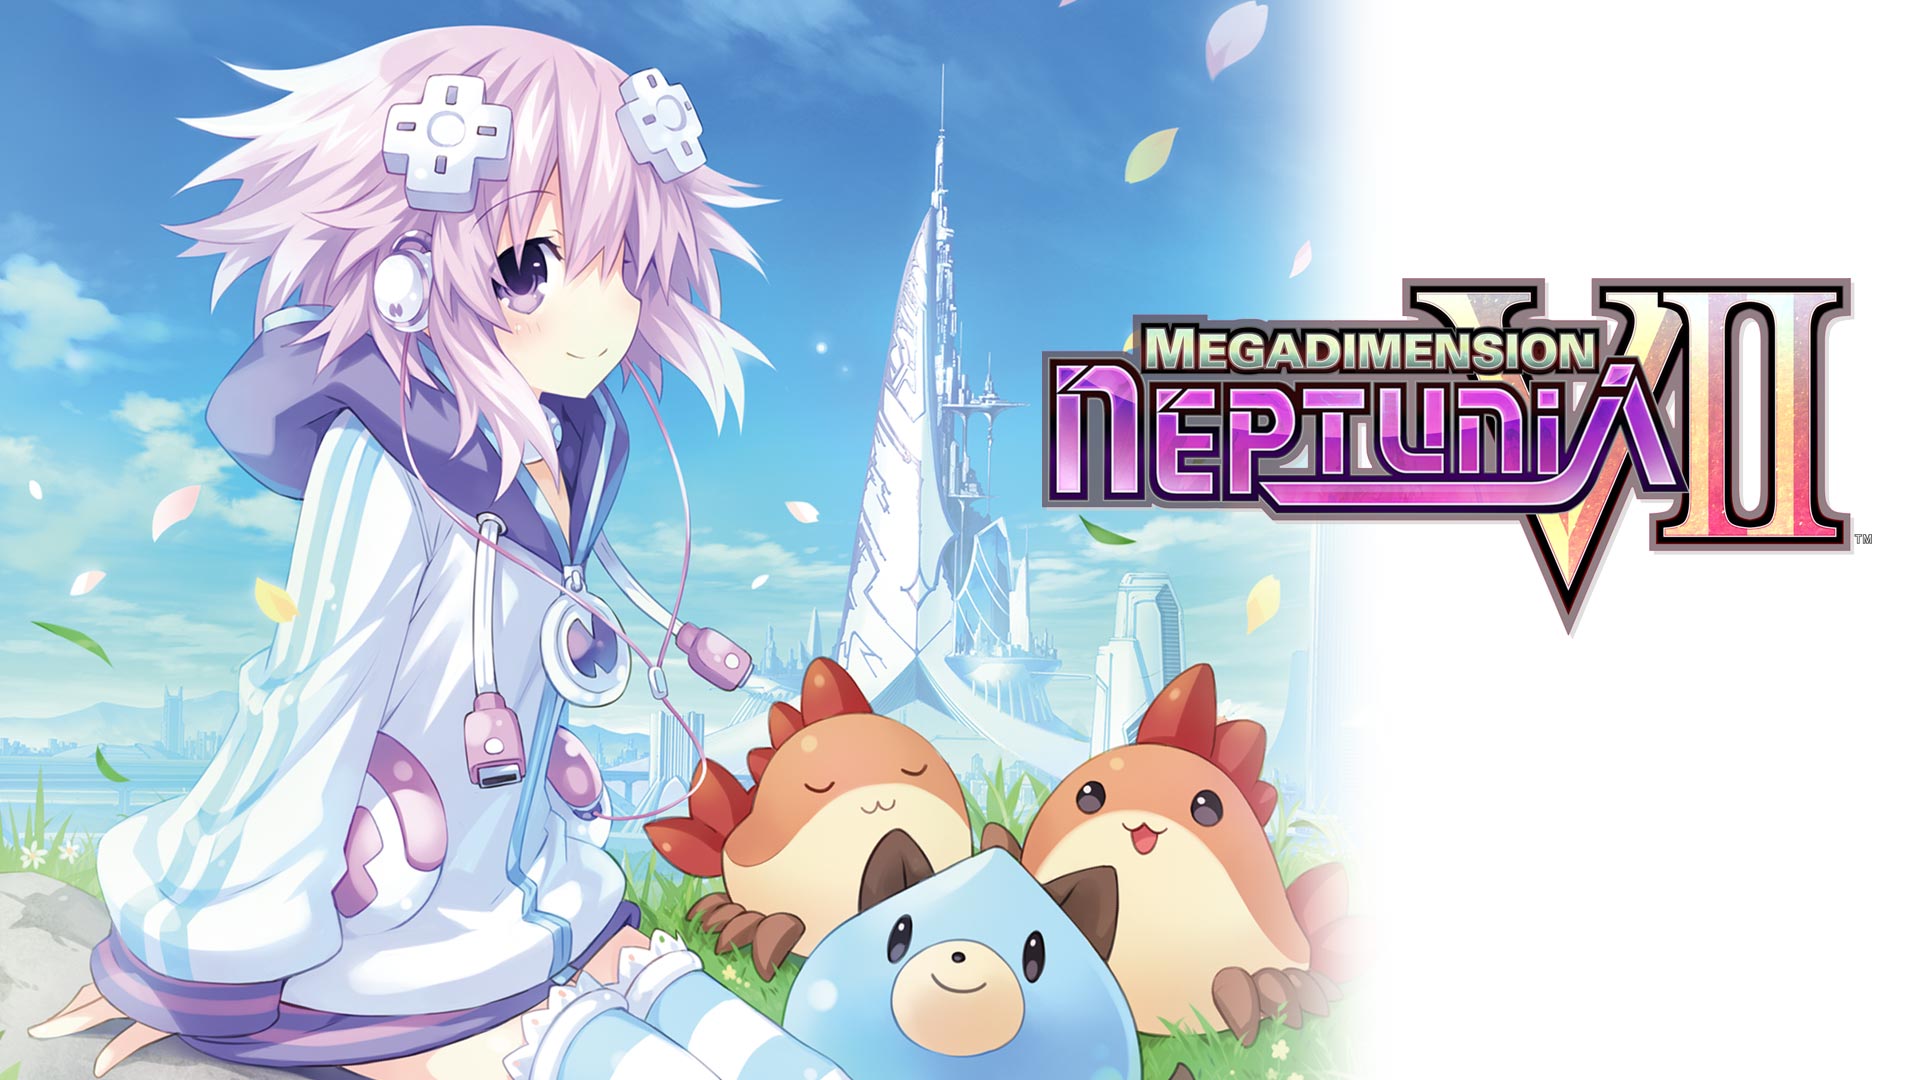 Descarga gratuita de fondo de pantalla para móvil de Videojuego, Neptuno (Hyperdimension Neptunia), Megadimension Neptunia Vii.